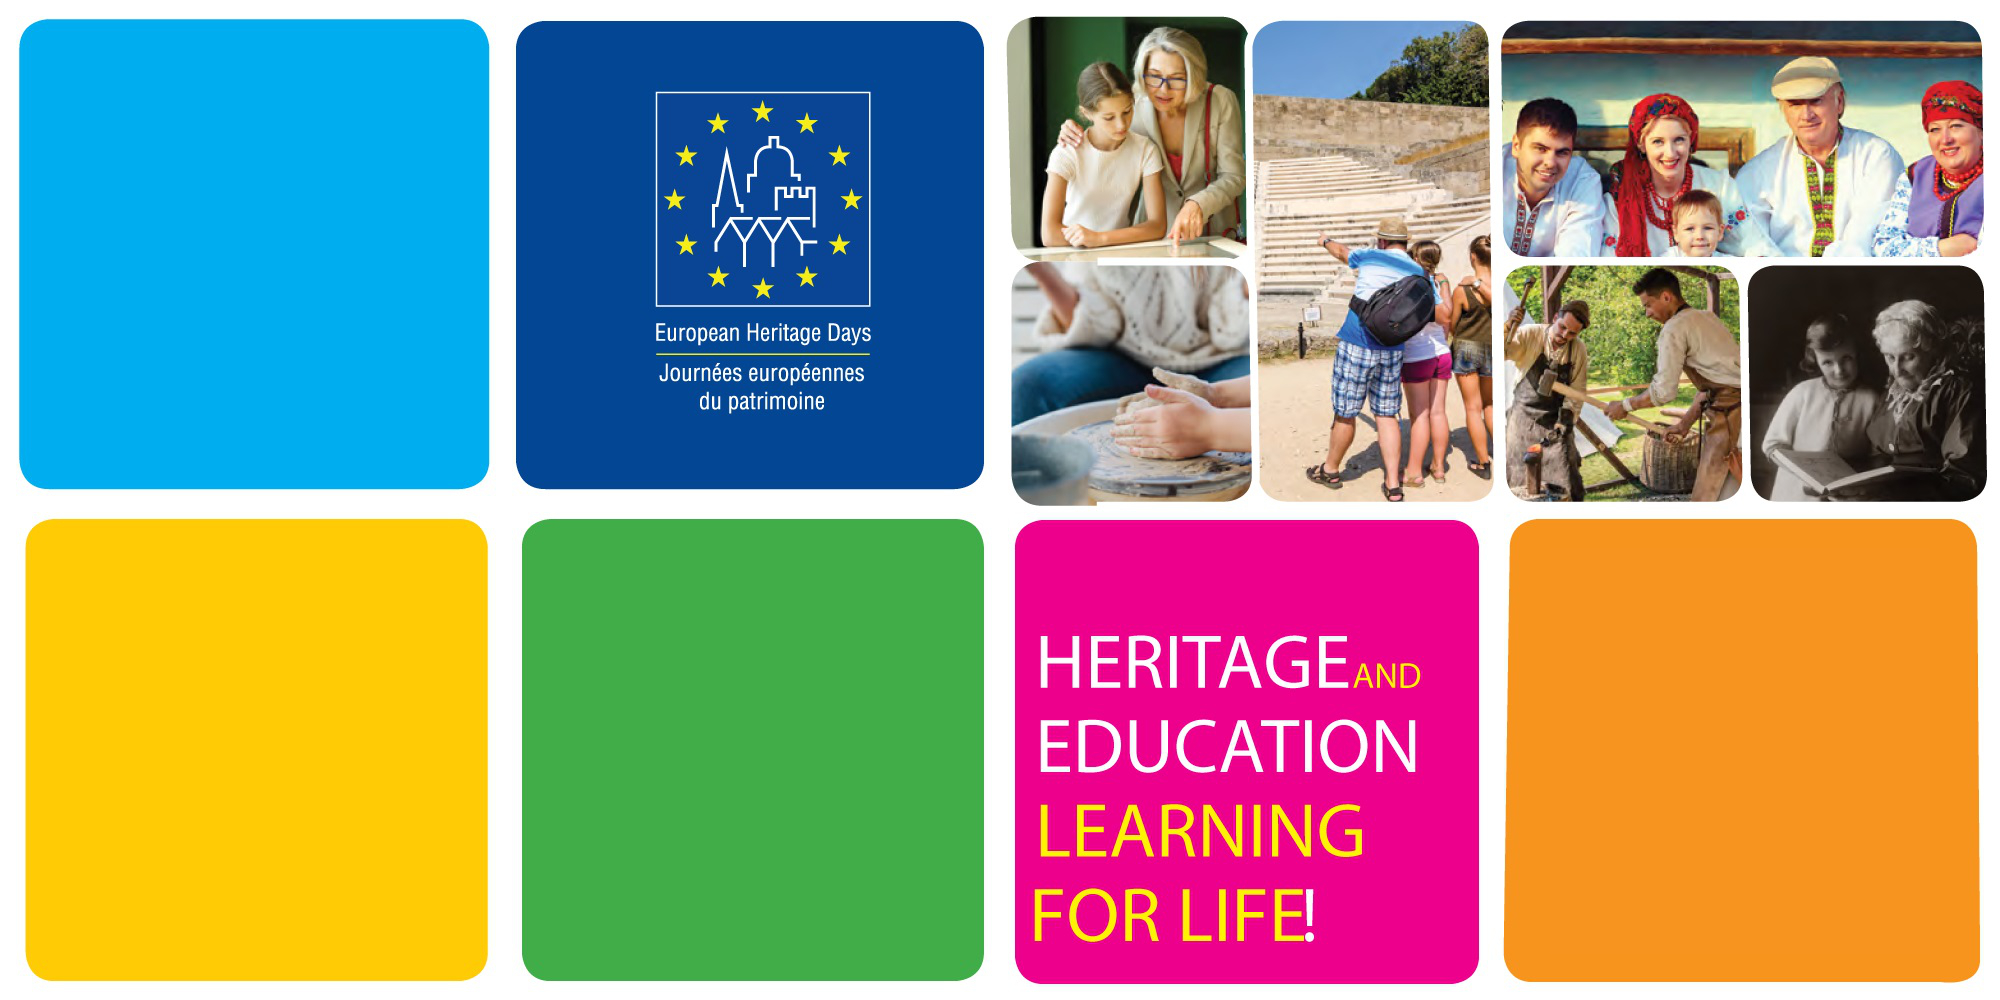 Presentation of CAPuS educational activities at the 2020 European Heritage Days in Croatia